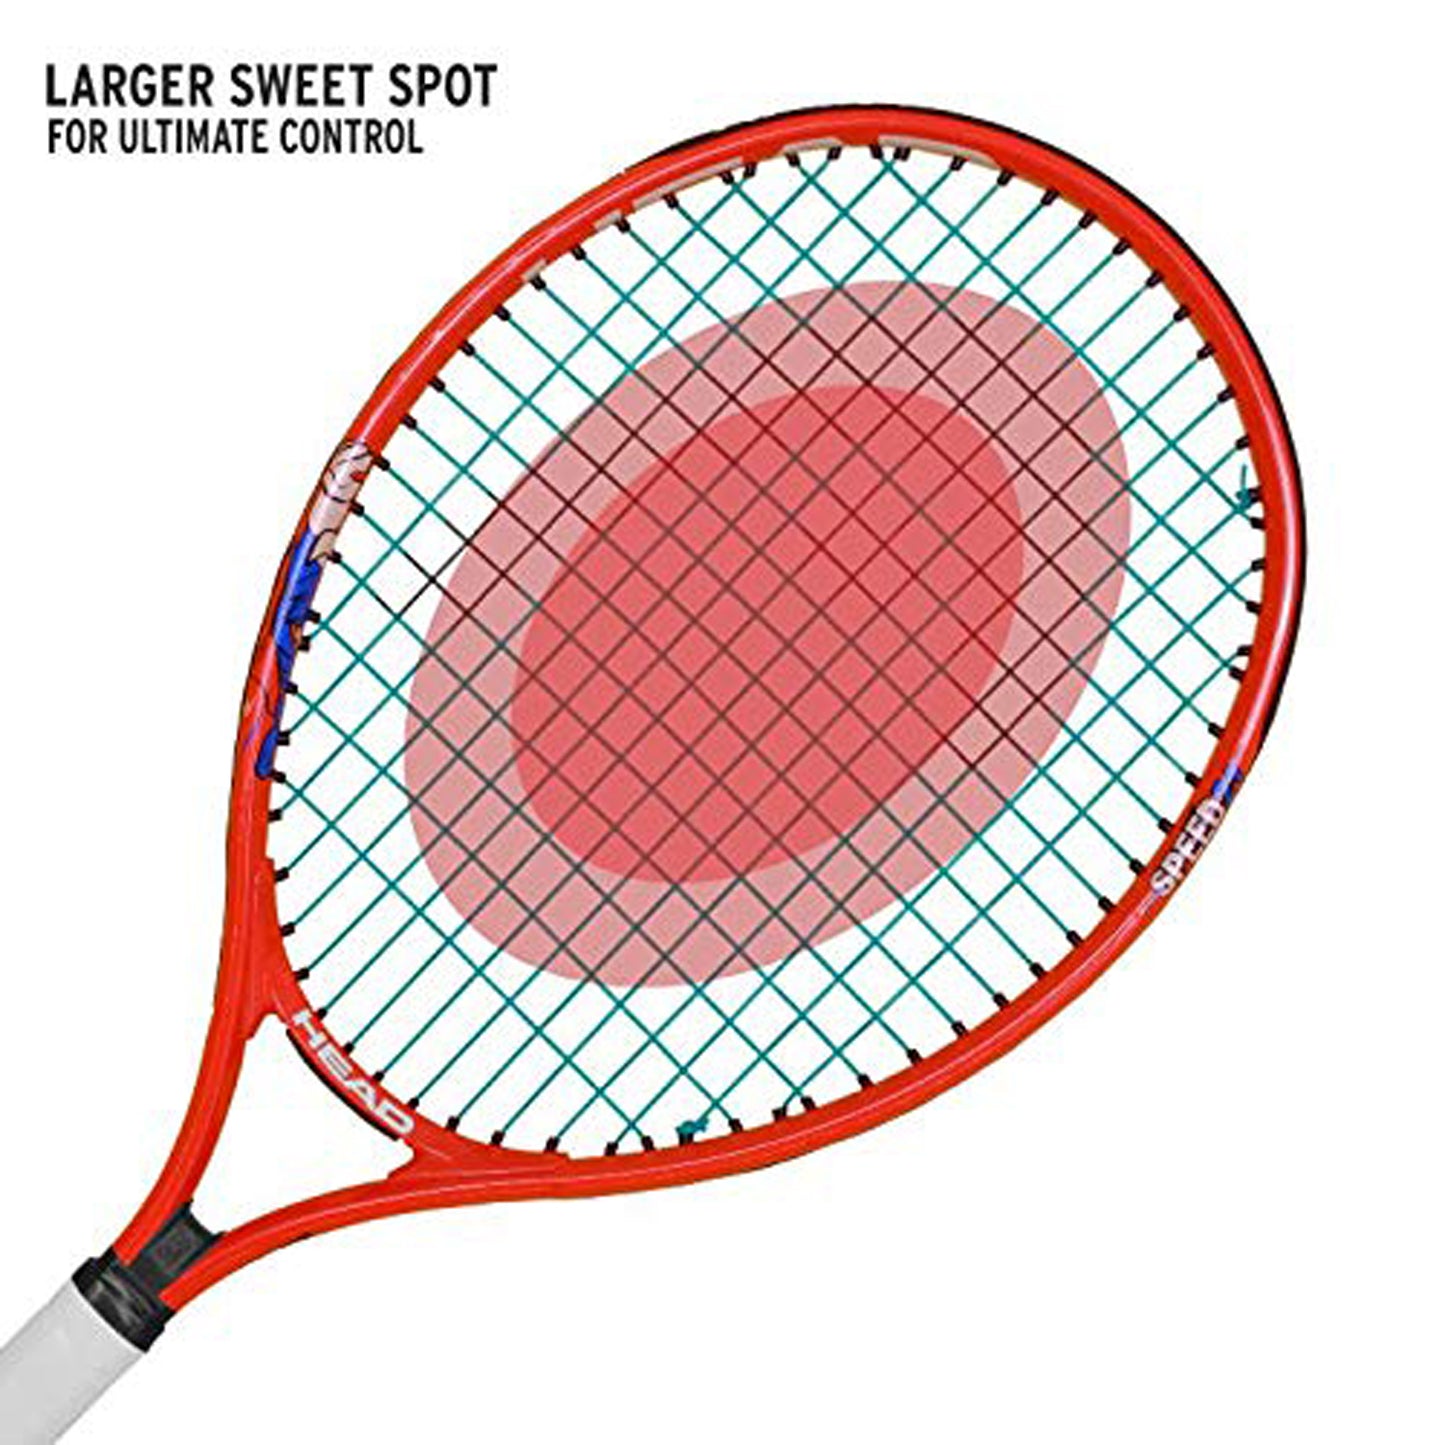 HEAD Speed 21 Graphite Strung Tennis Racquet for Juniors - Best Price online Prokicksports.com